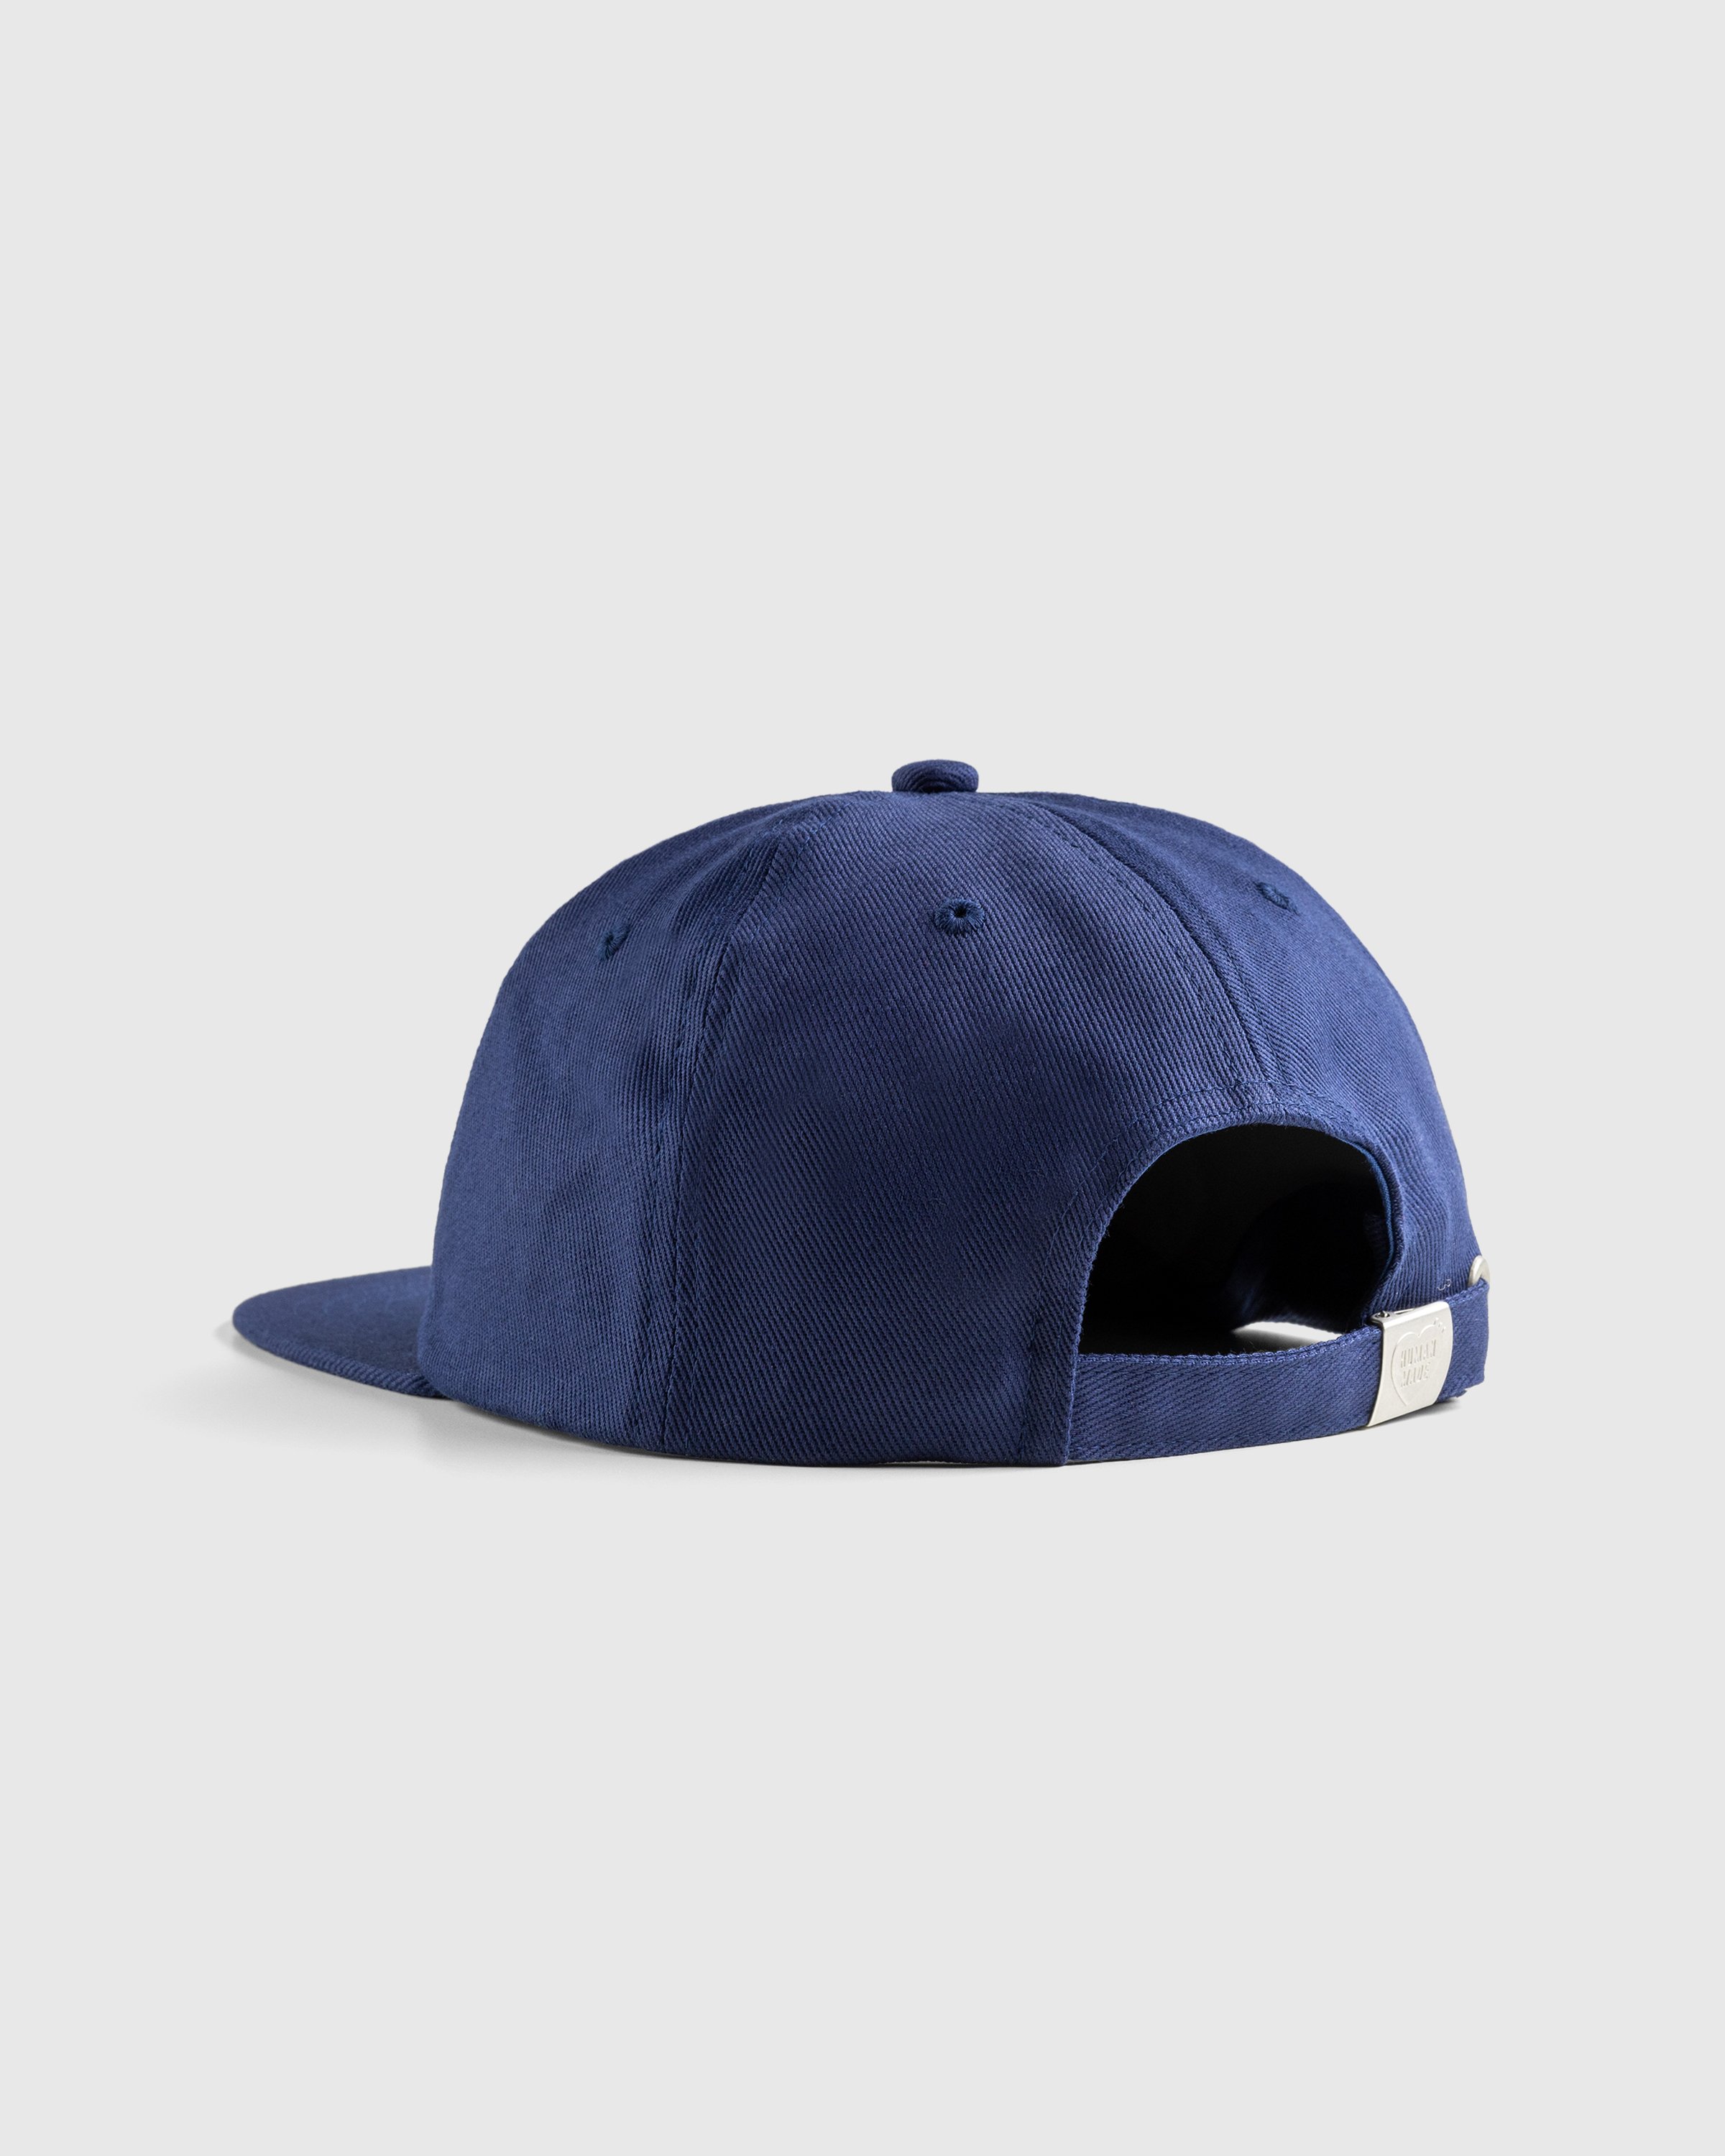 Human Made - BASEBALL CAP NAVY - Accessories - Blue - Image 2